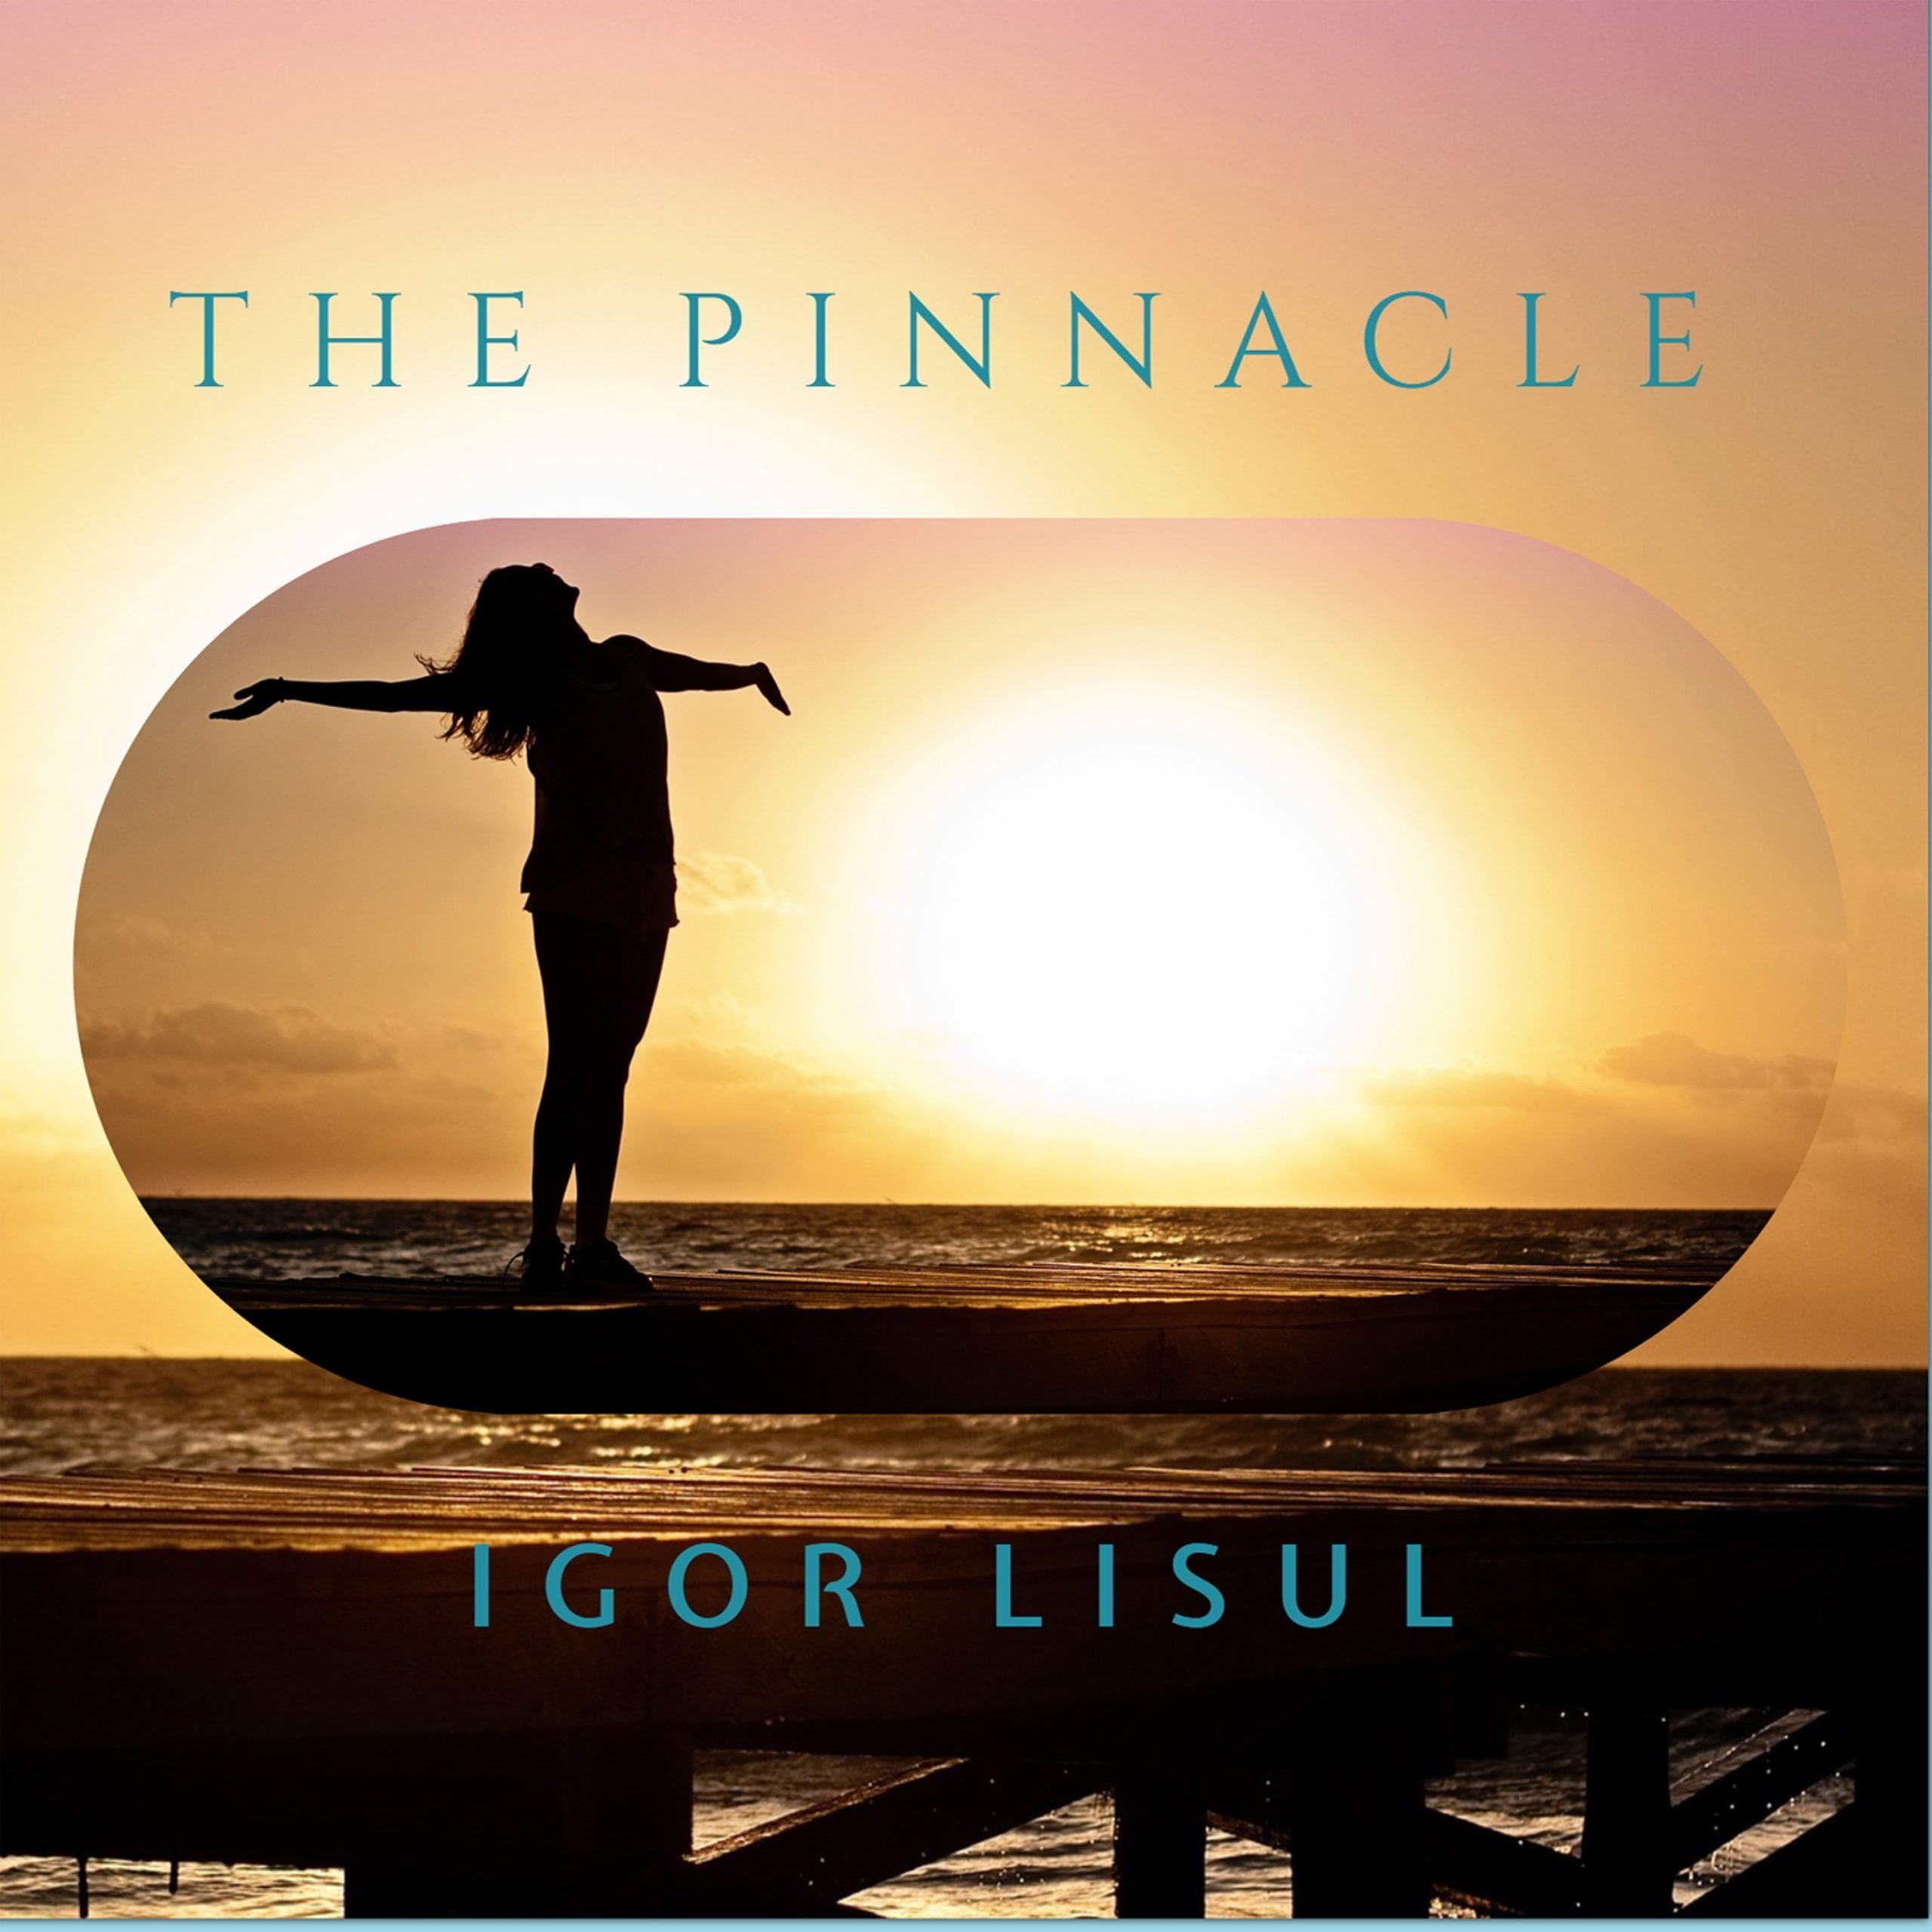 Igor Lisul’s – The Pinnacle